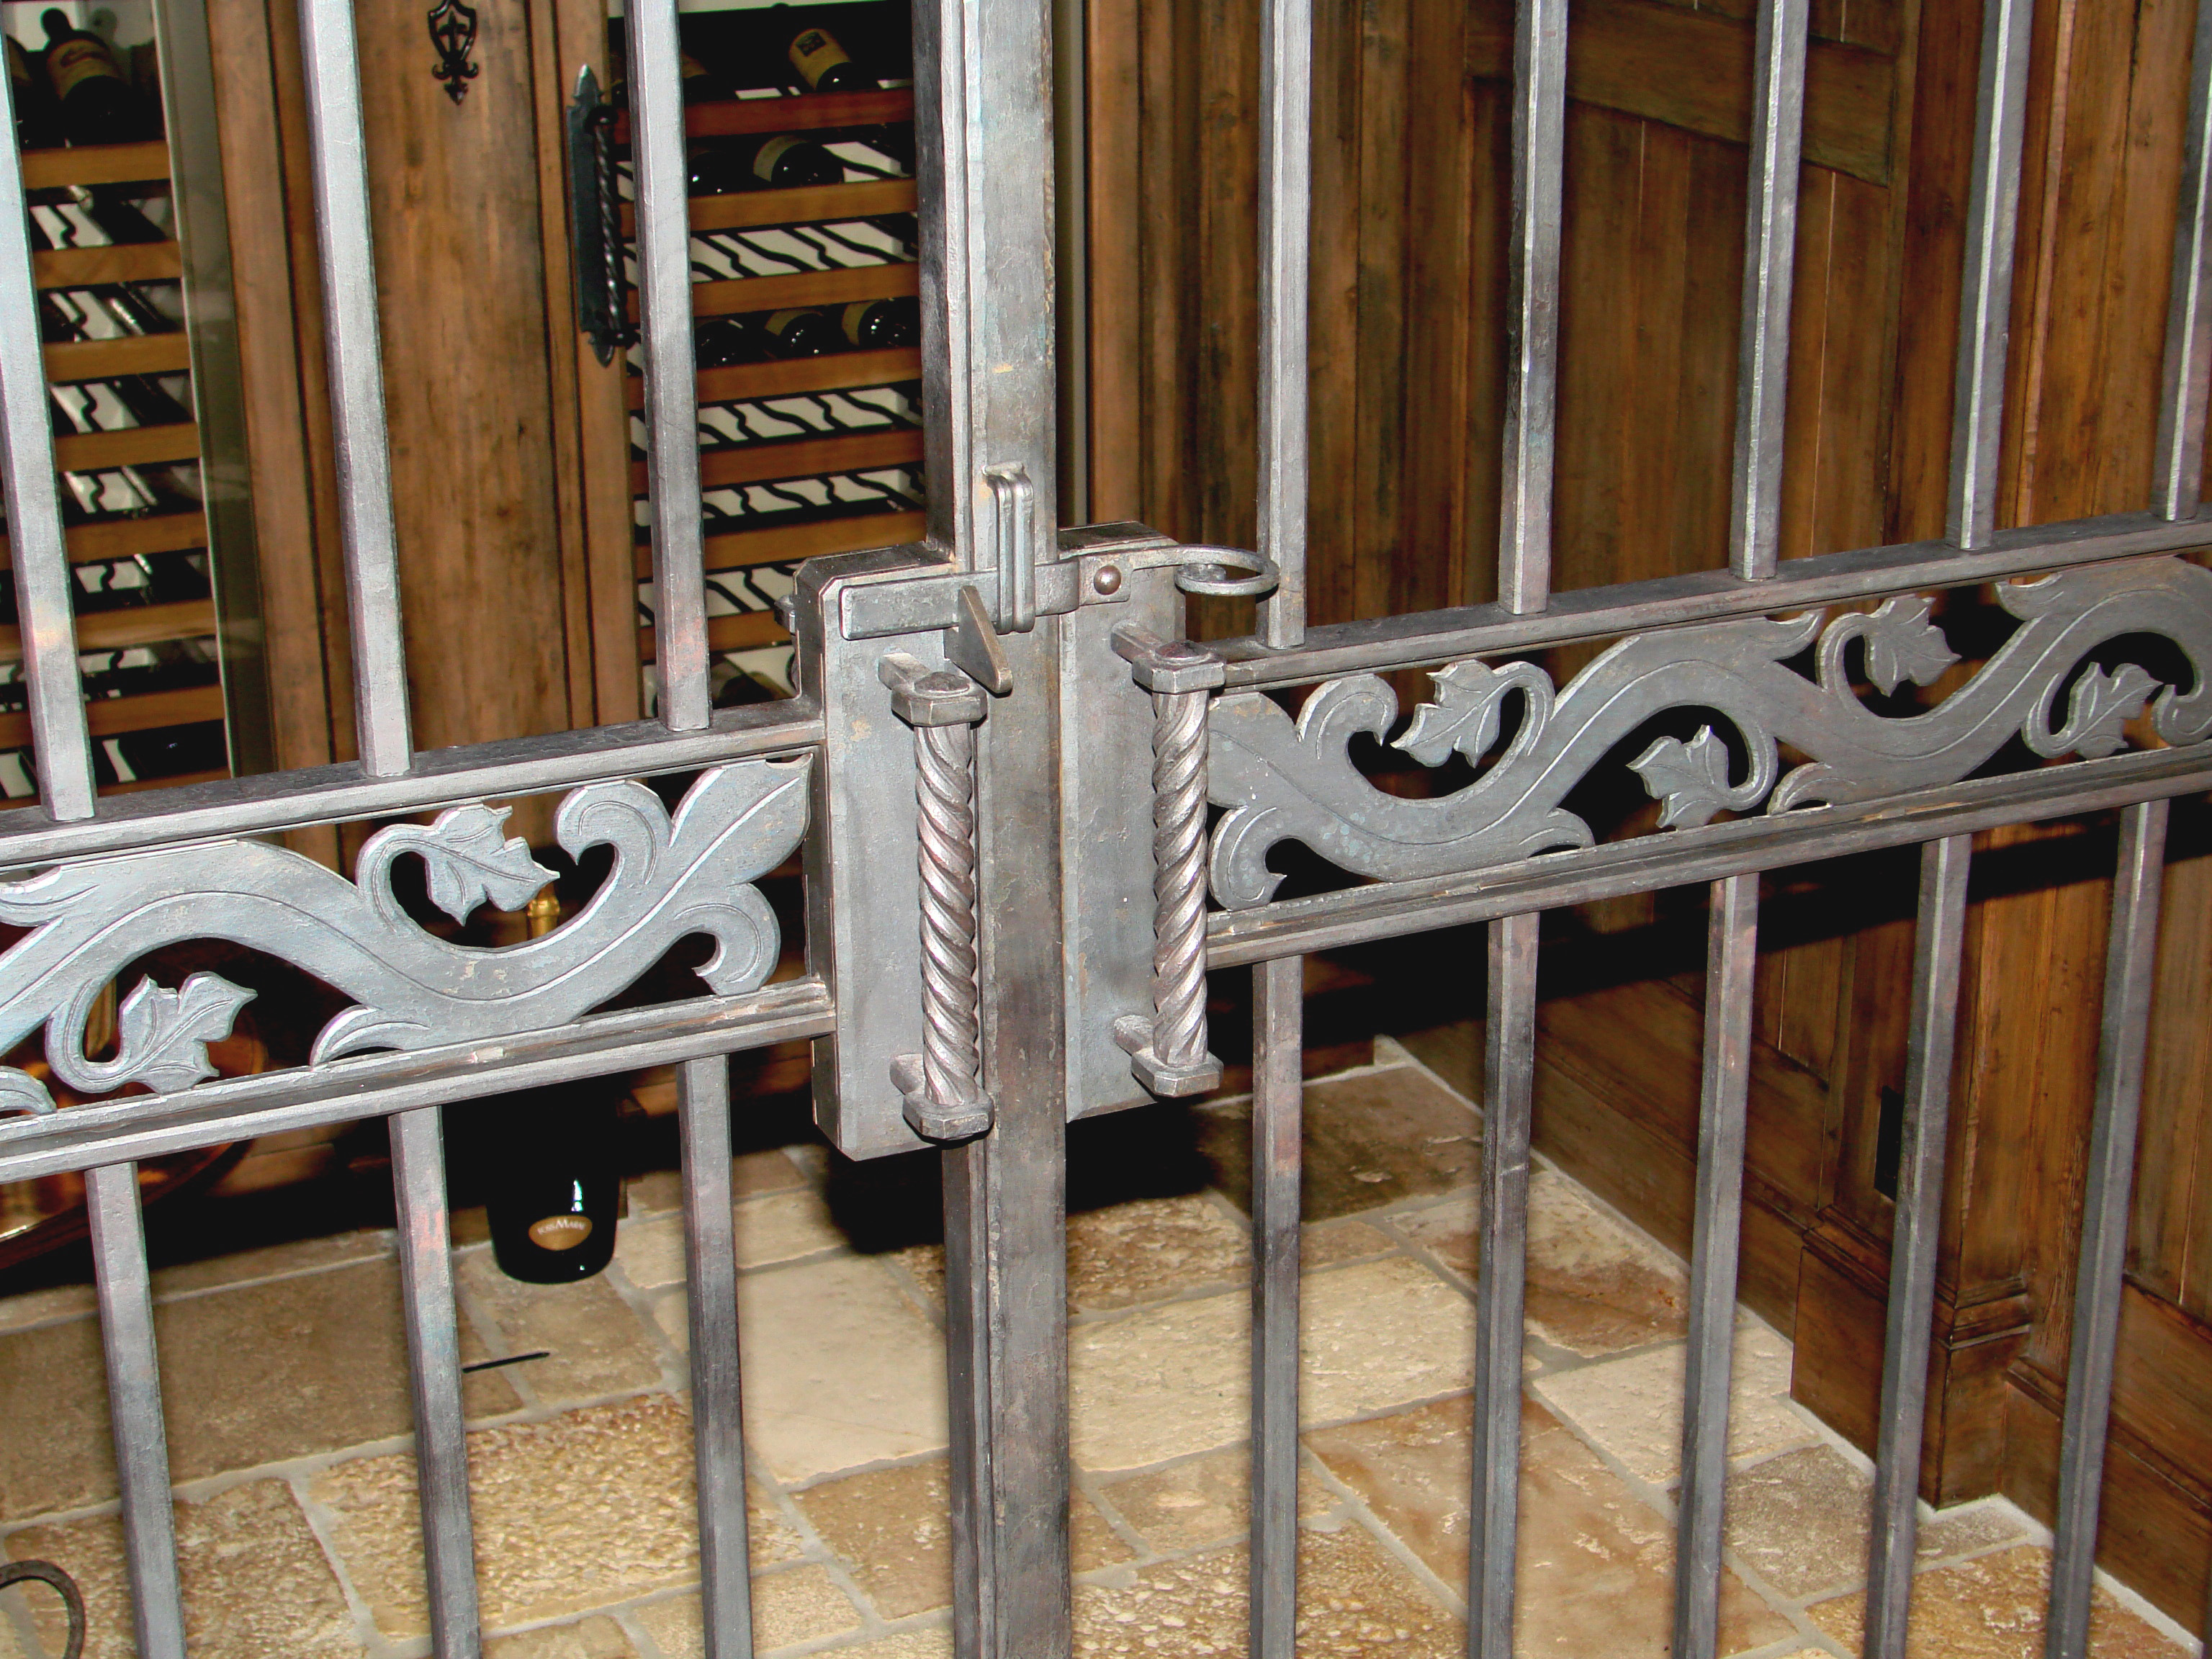 Latch detail of Wine Cellar Gates